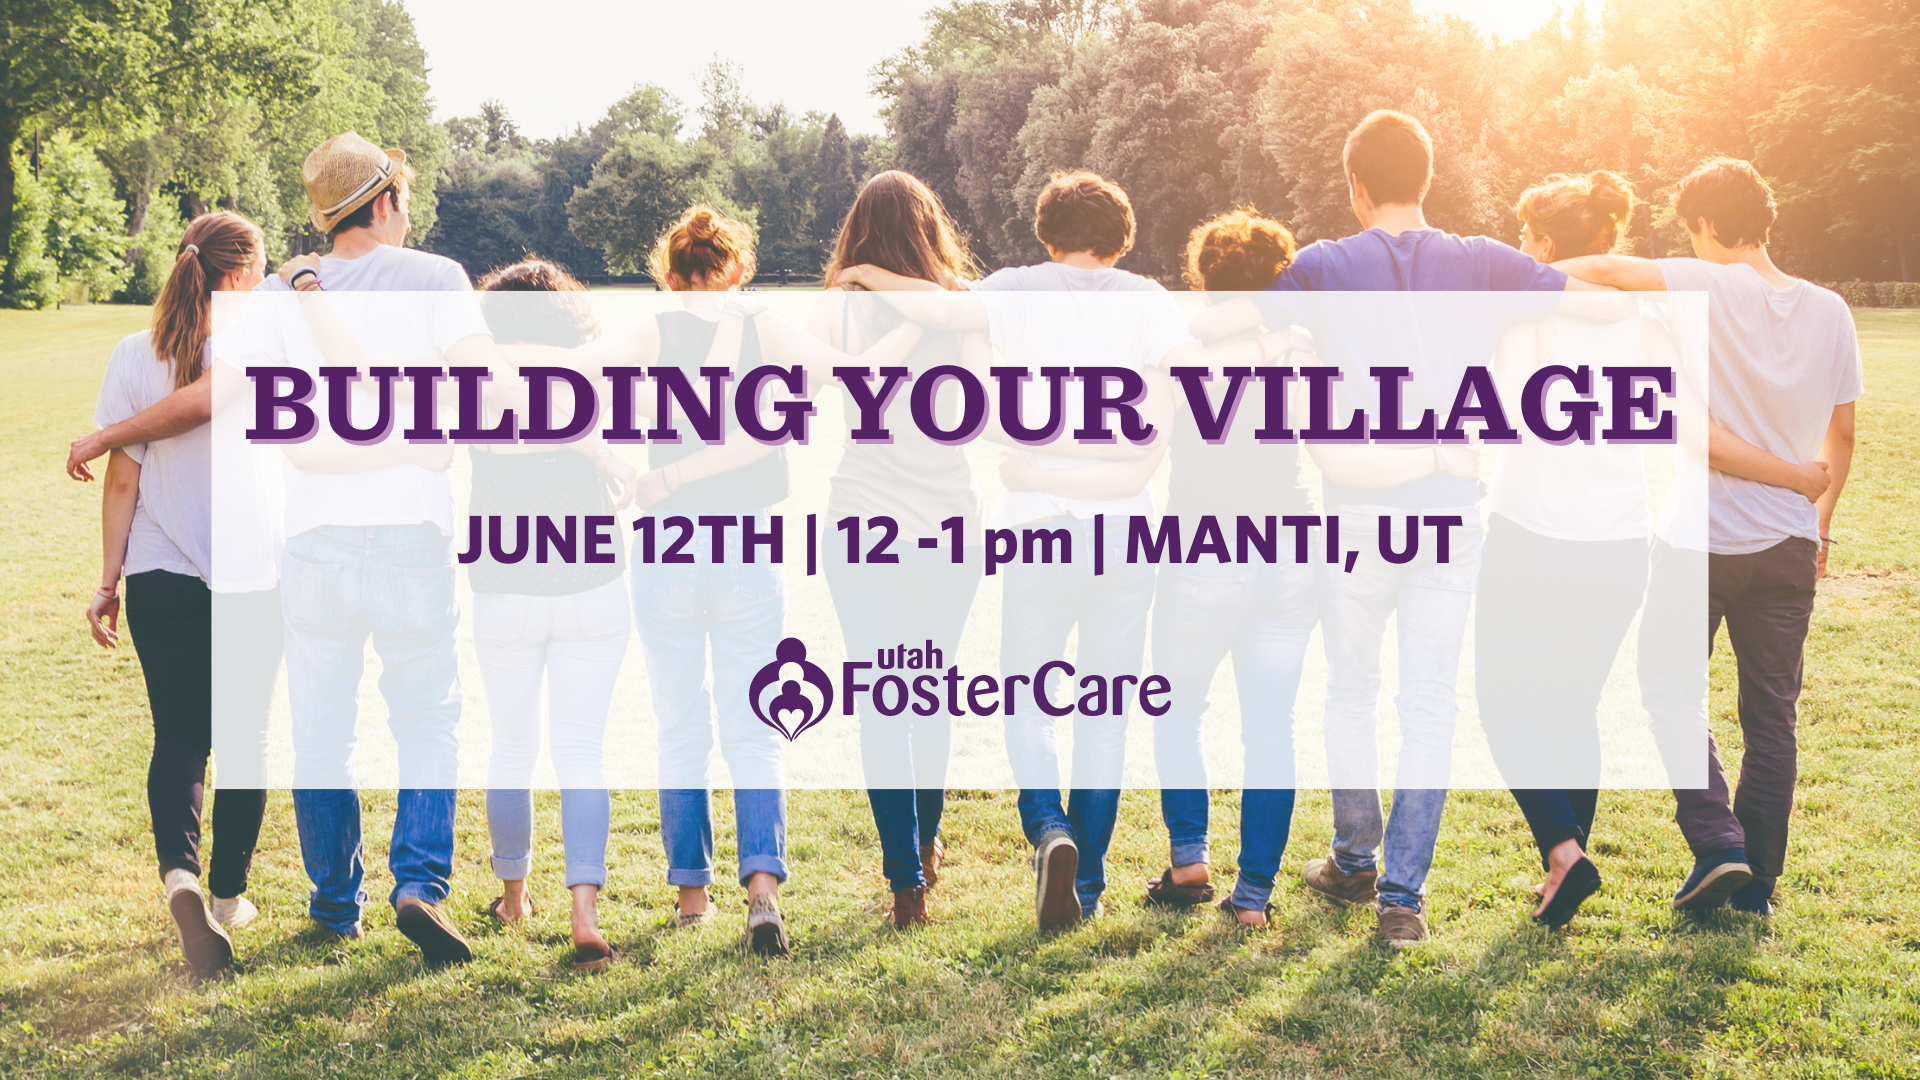 Building Your Village - Manti - Utah Foster Care